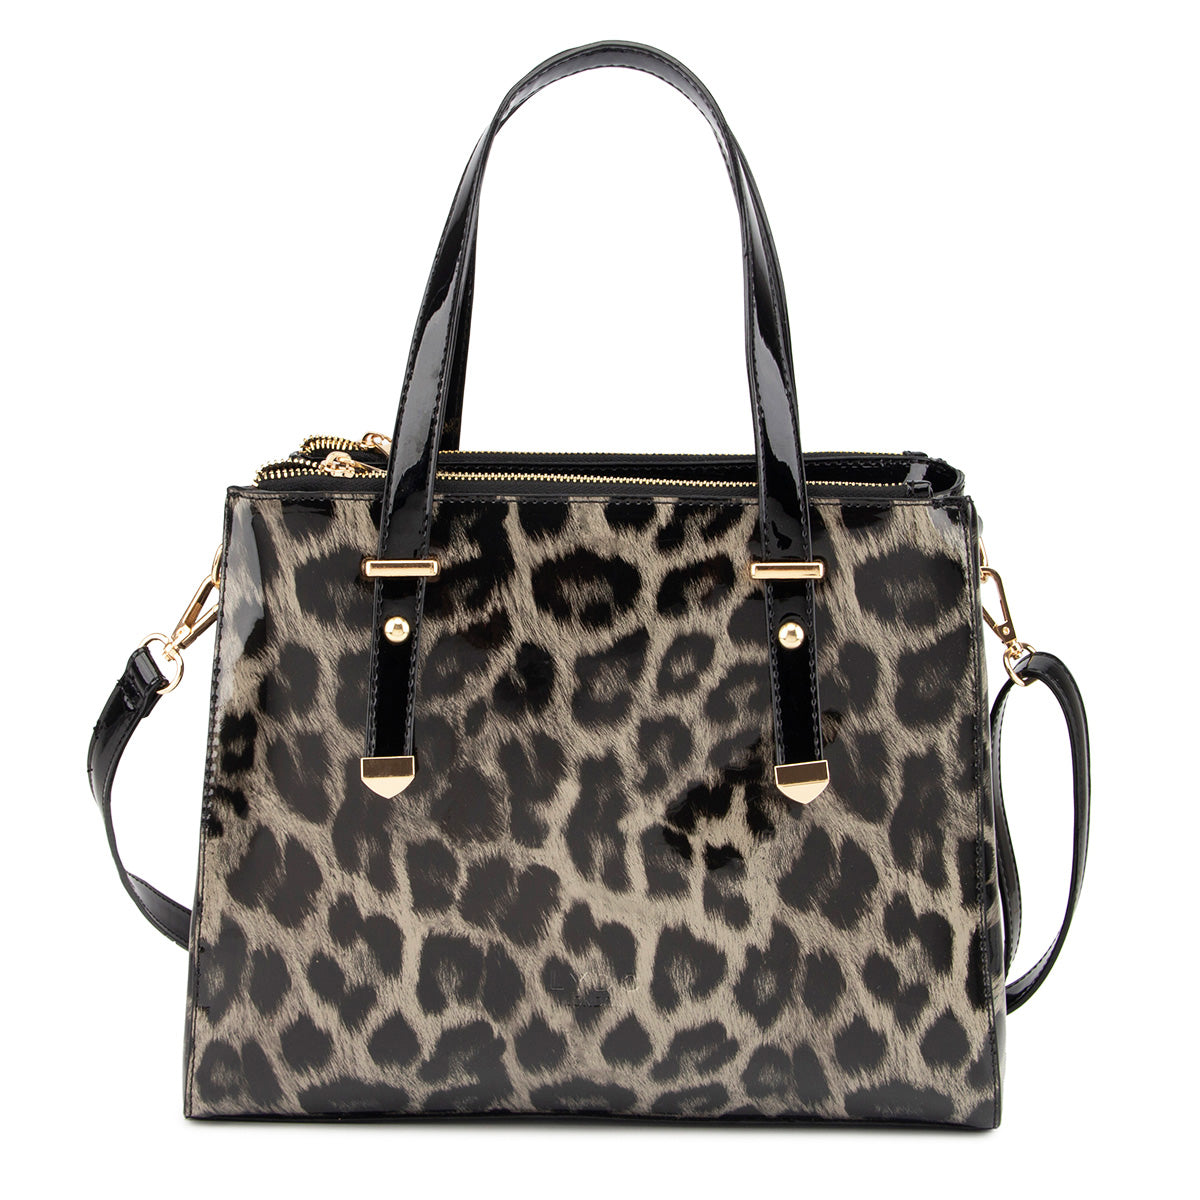 LYDC Leopard Pattern Handbag